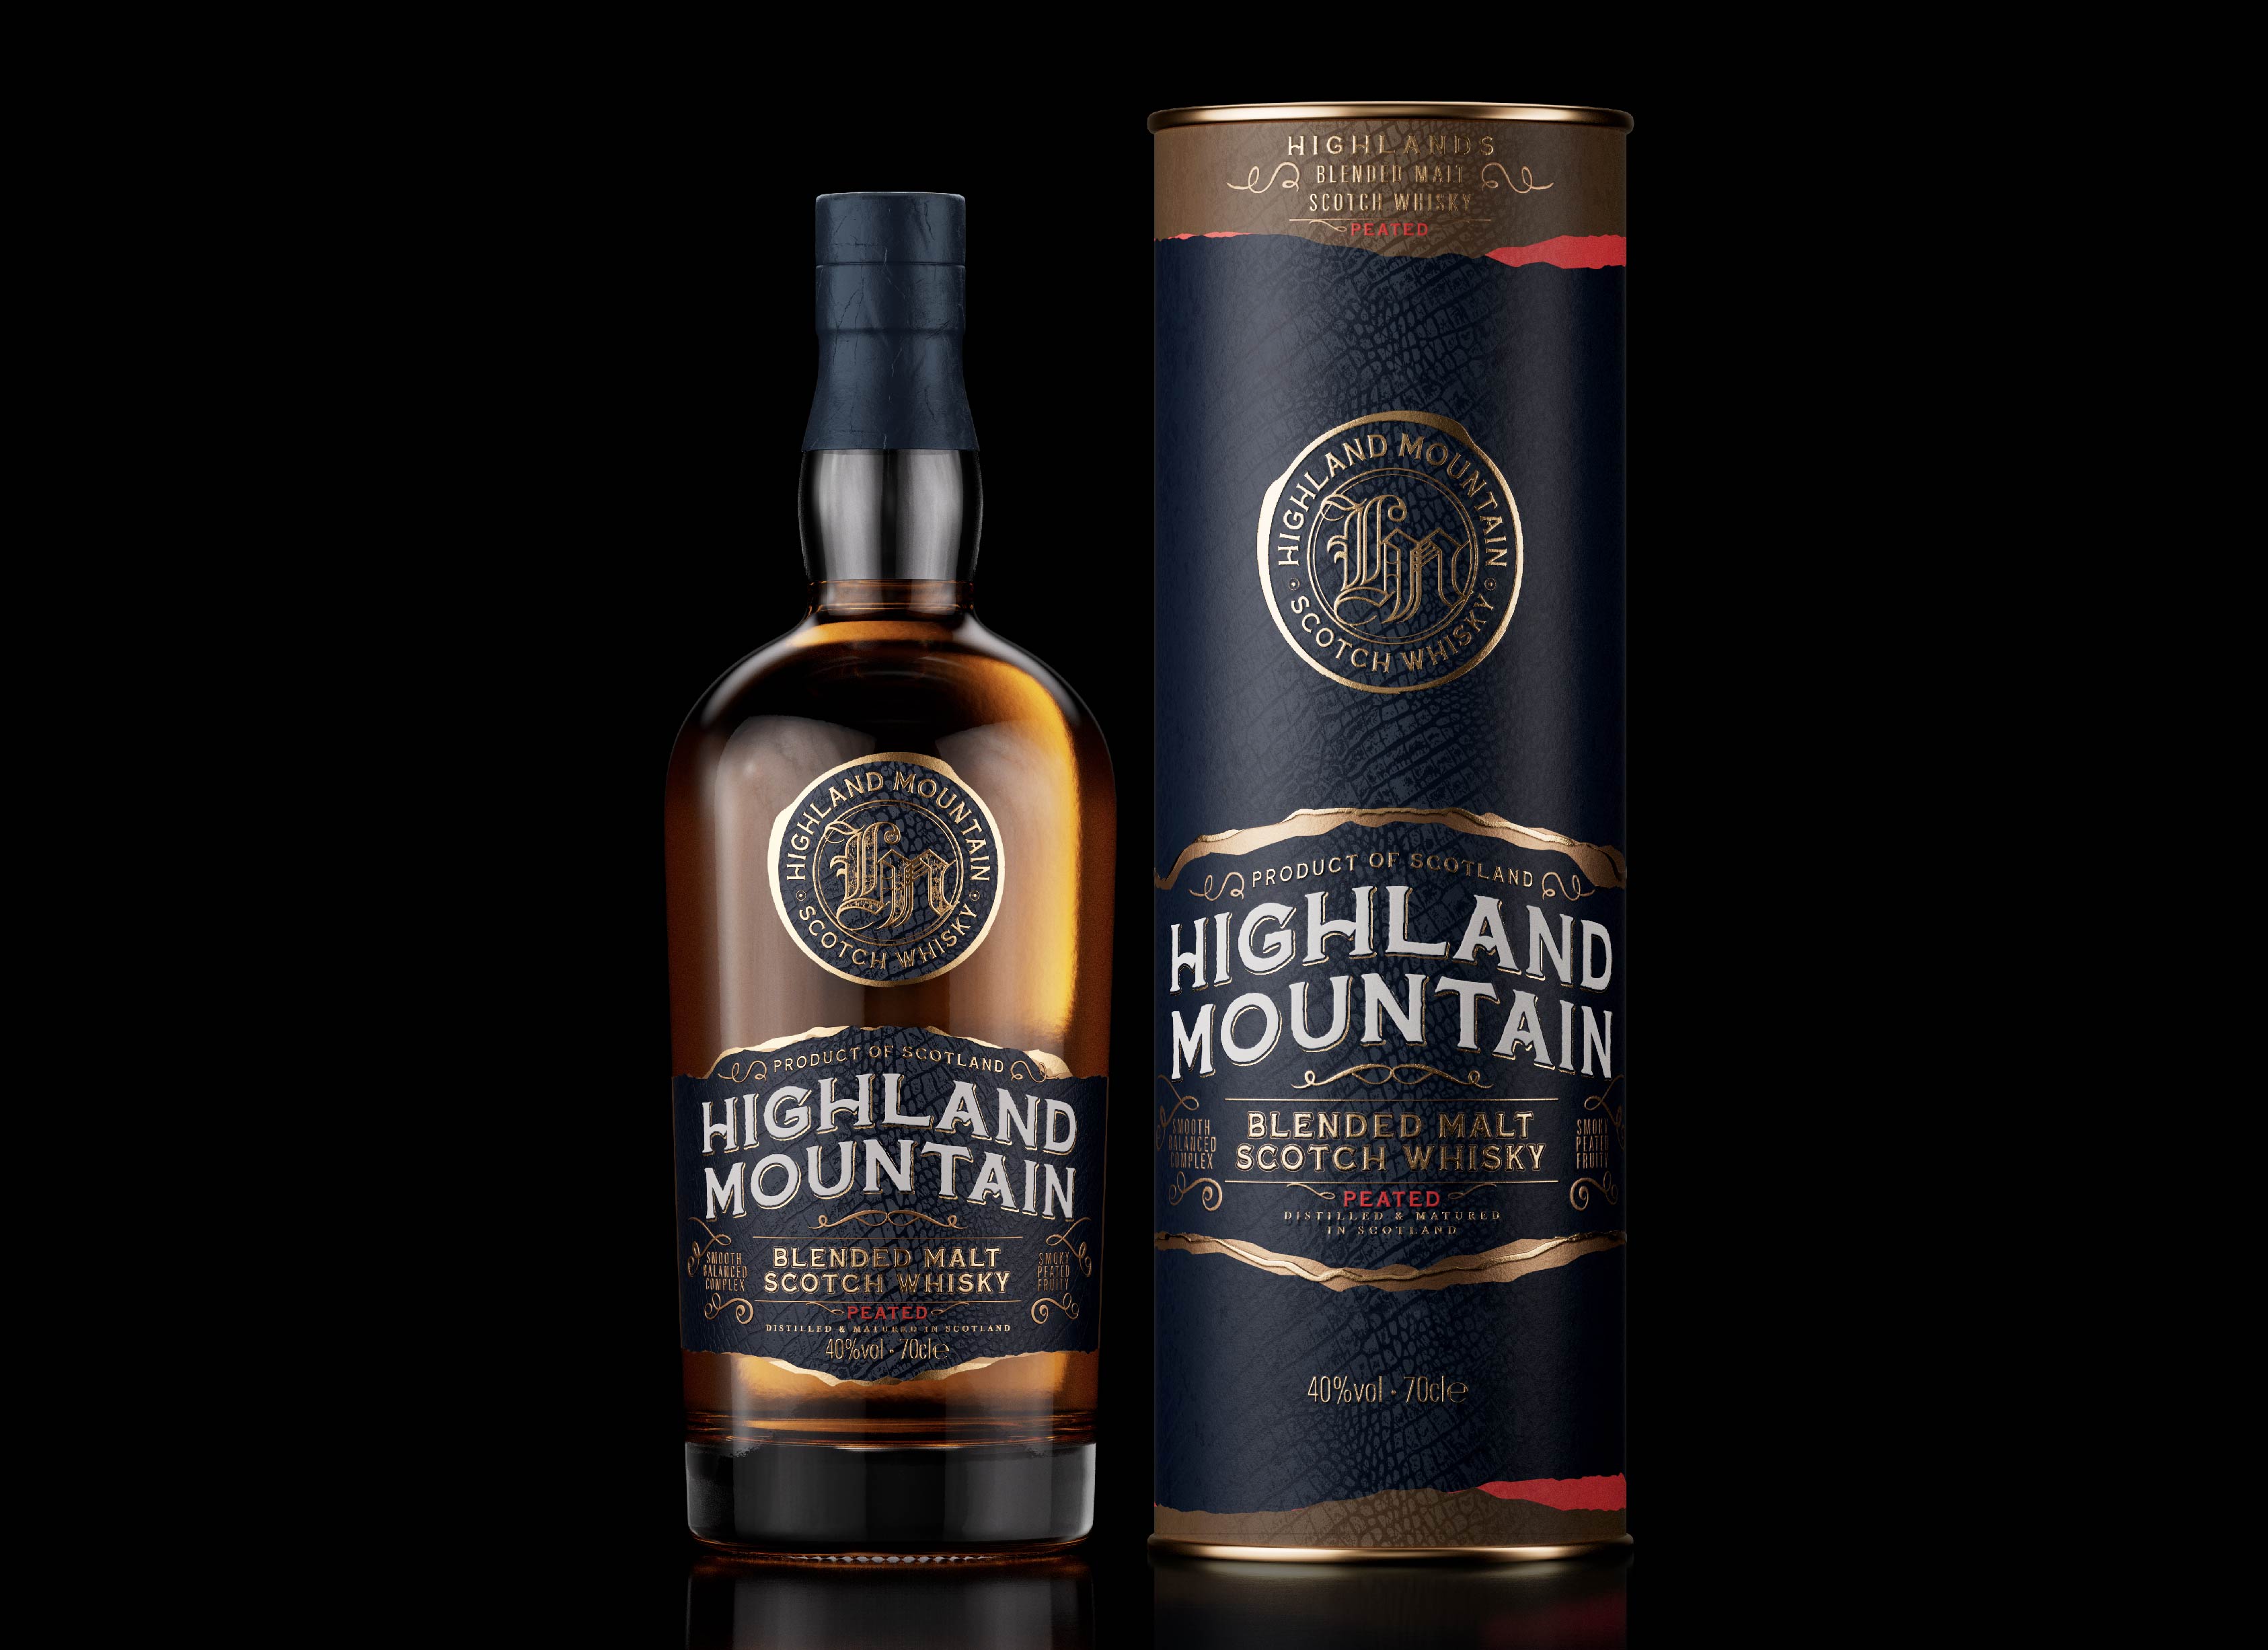 Highland Mountain